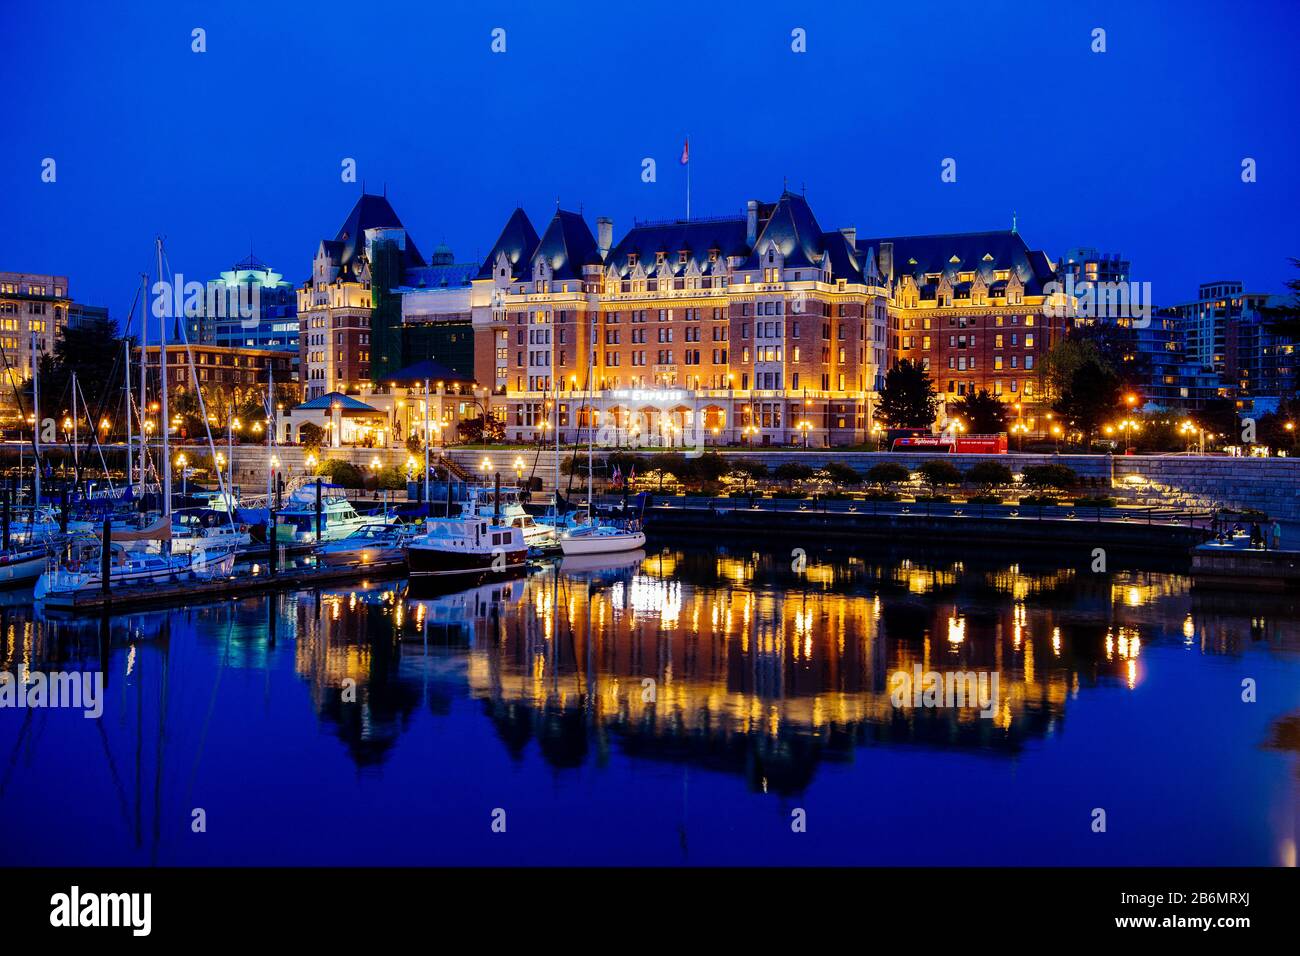 Empress Hotel at night, Victoria, British Columbia, Canada Stock Photo